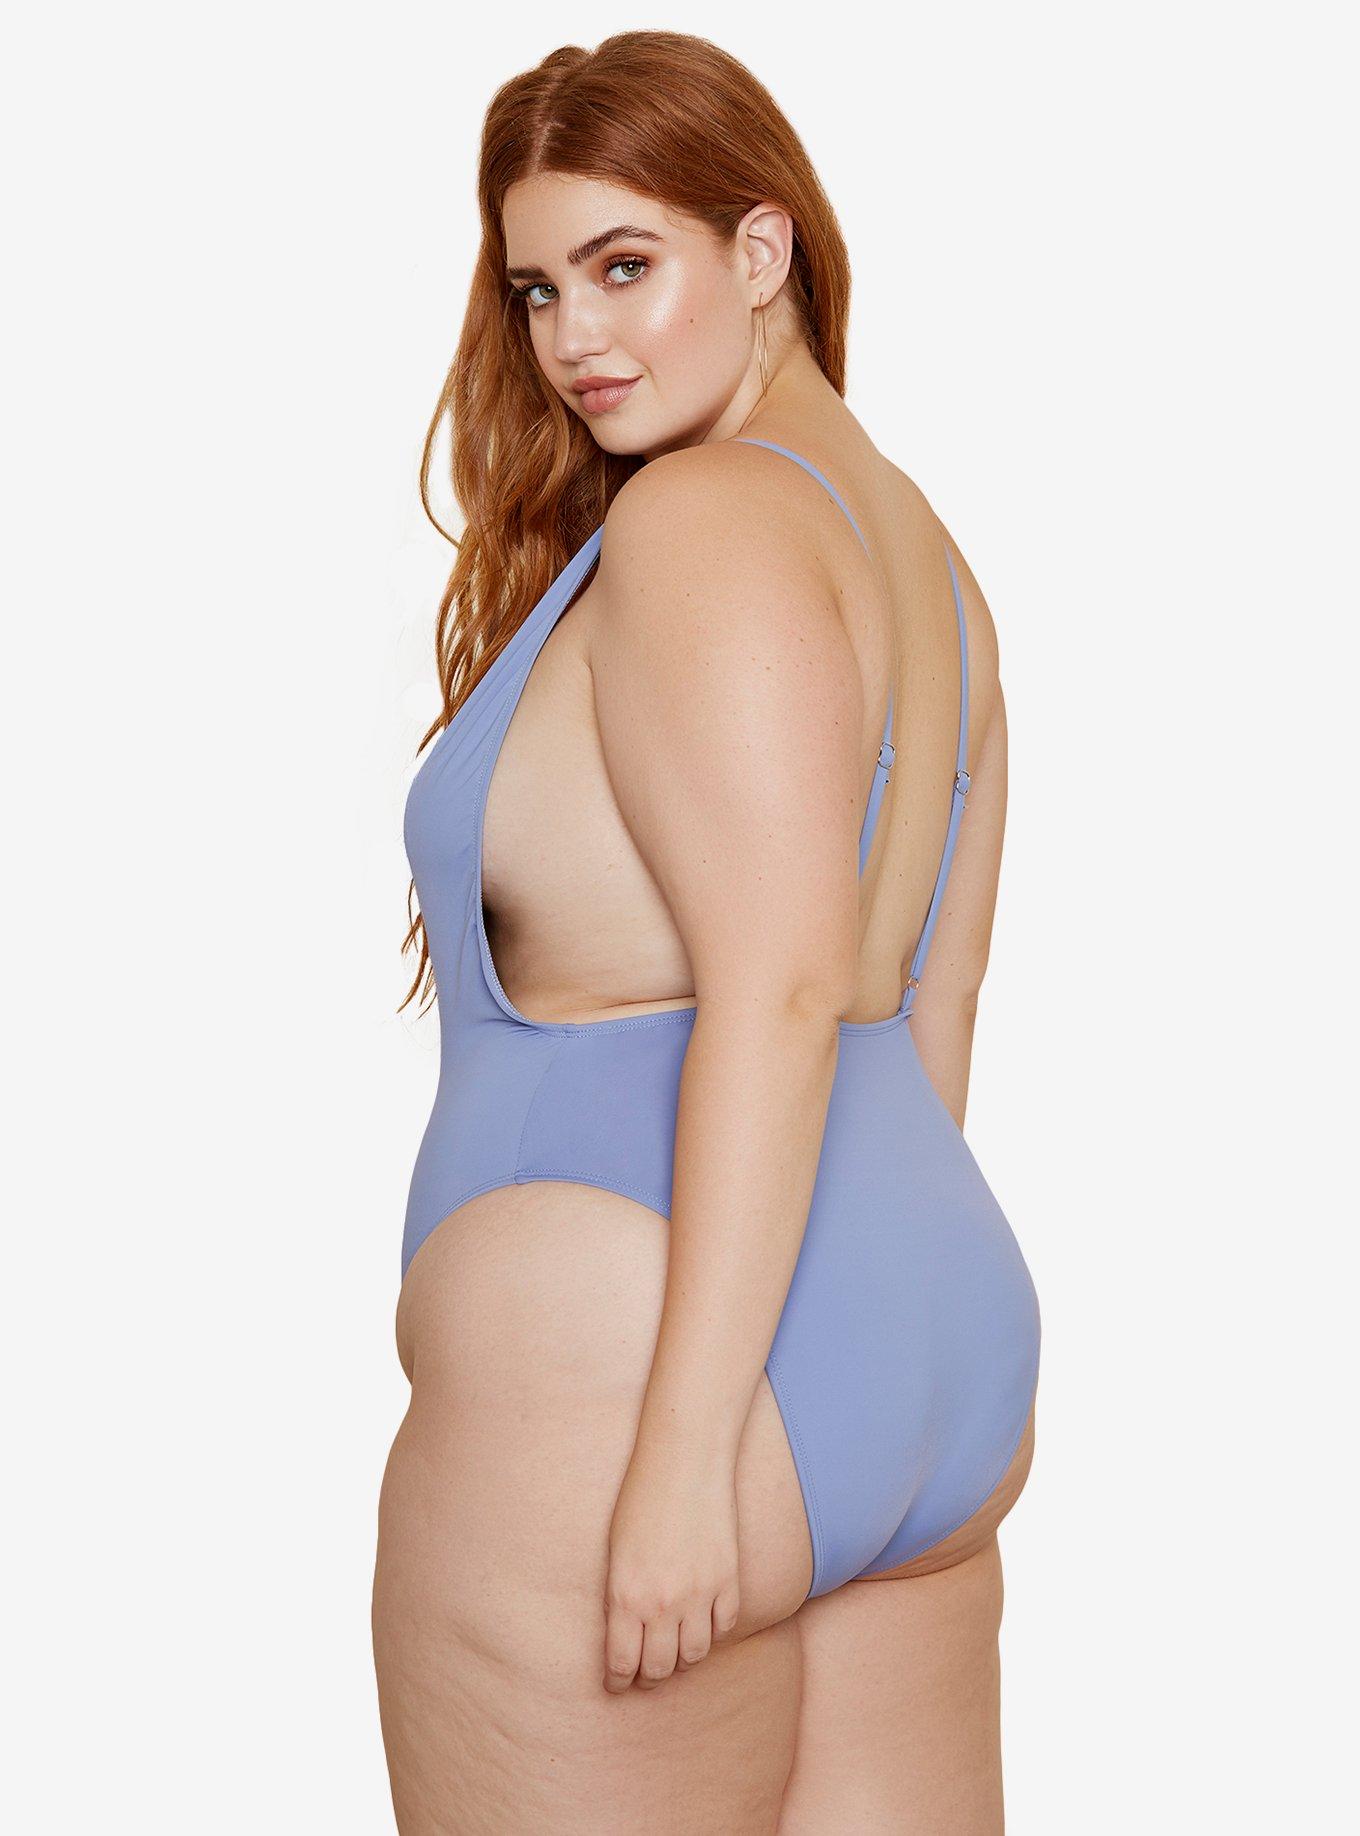 Dippin' Daisy's Euphoria Swimsuit Baja Plus Size, BLUE, alternate